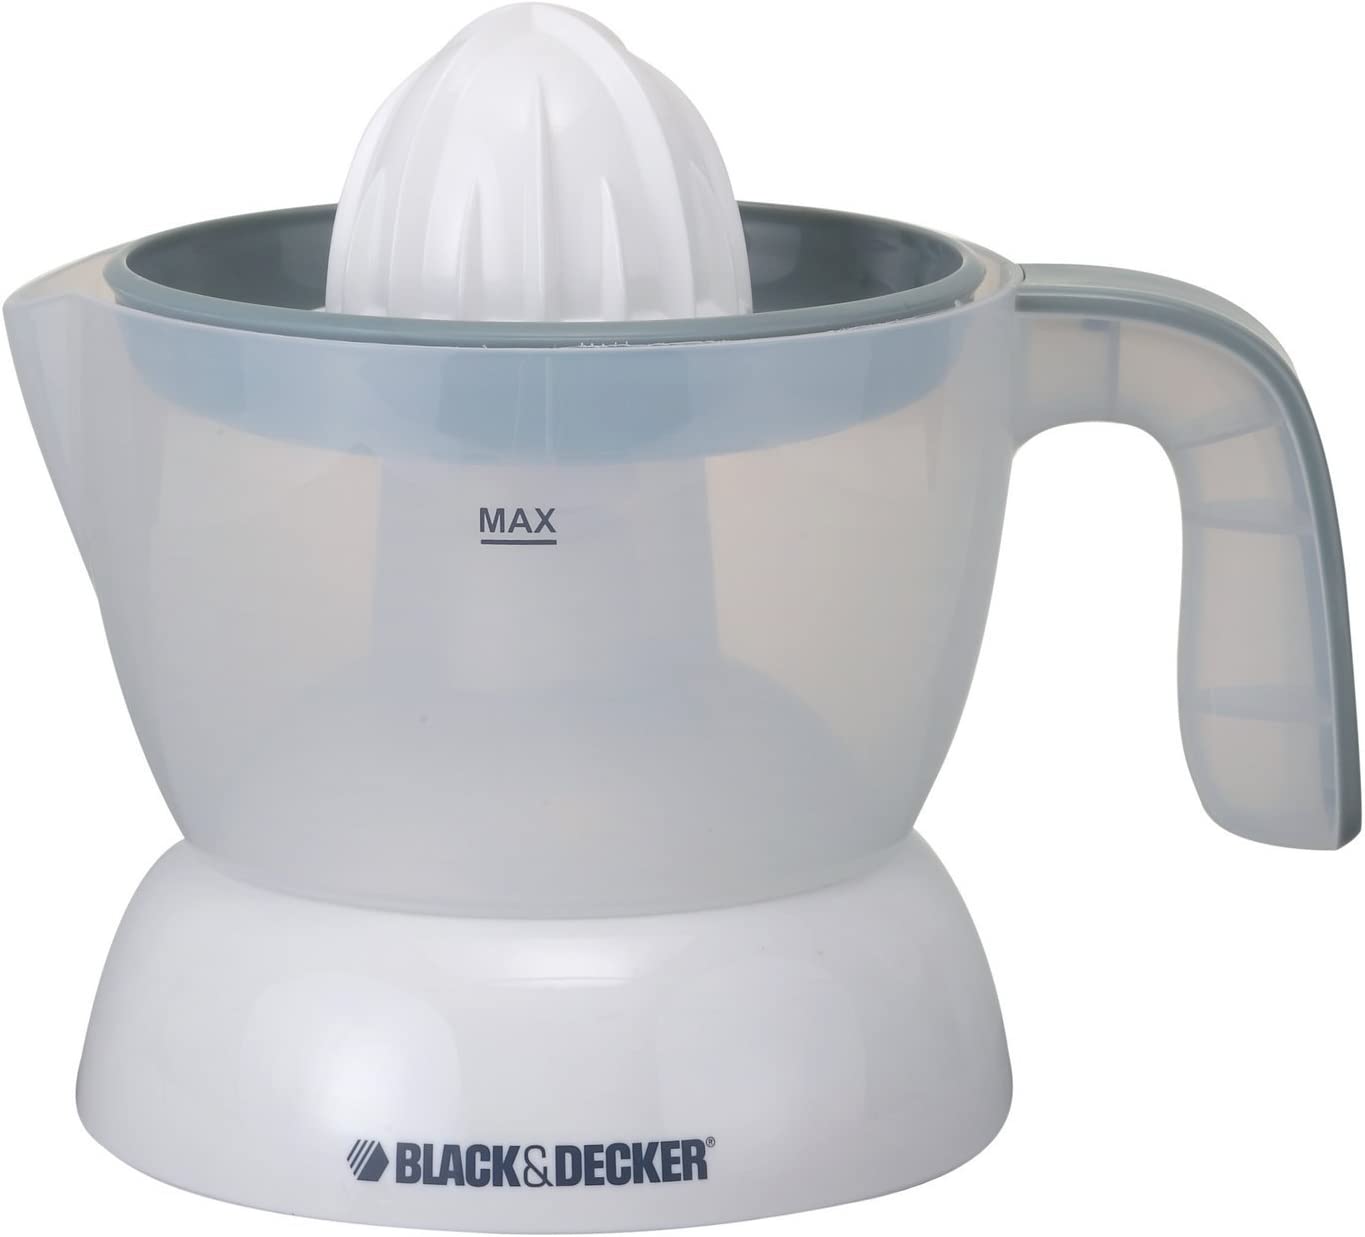 Black & Decker CJ200 0.5-Litre 30-Watt Citrus Juicer | Fruit juicer | Kitchen Appliances